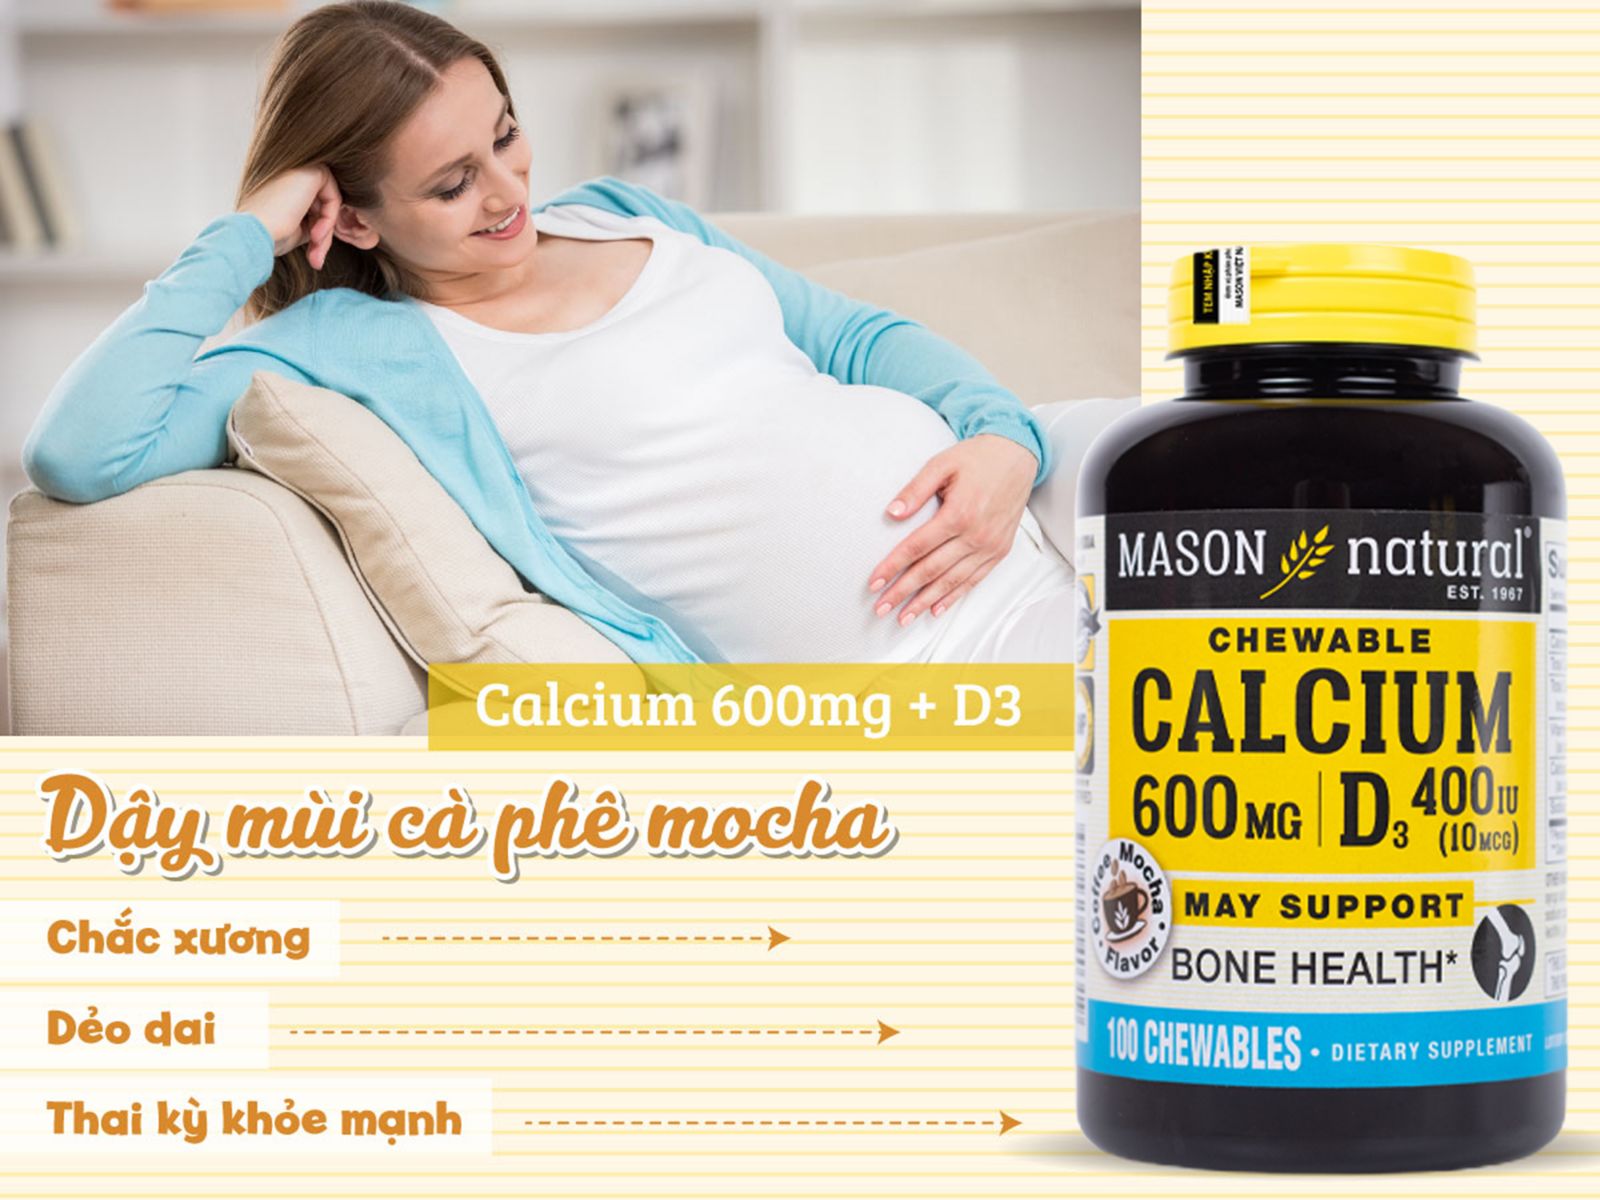 Mason Calcium 600mg + D3 (coffee mocha flavore)